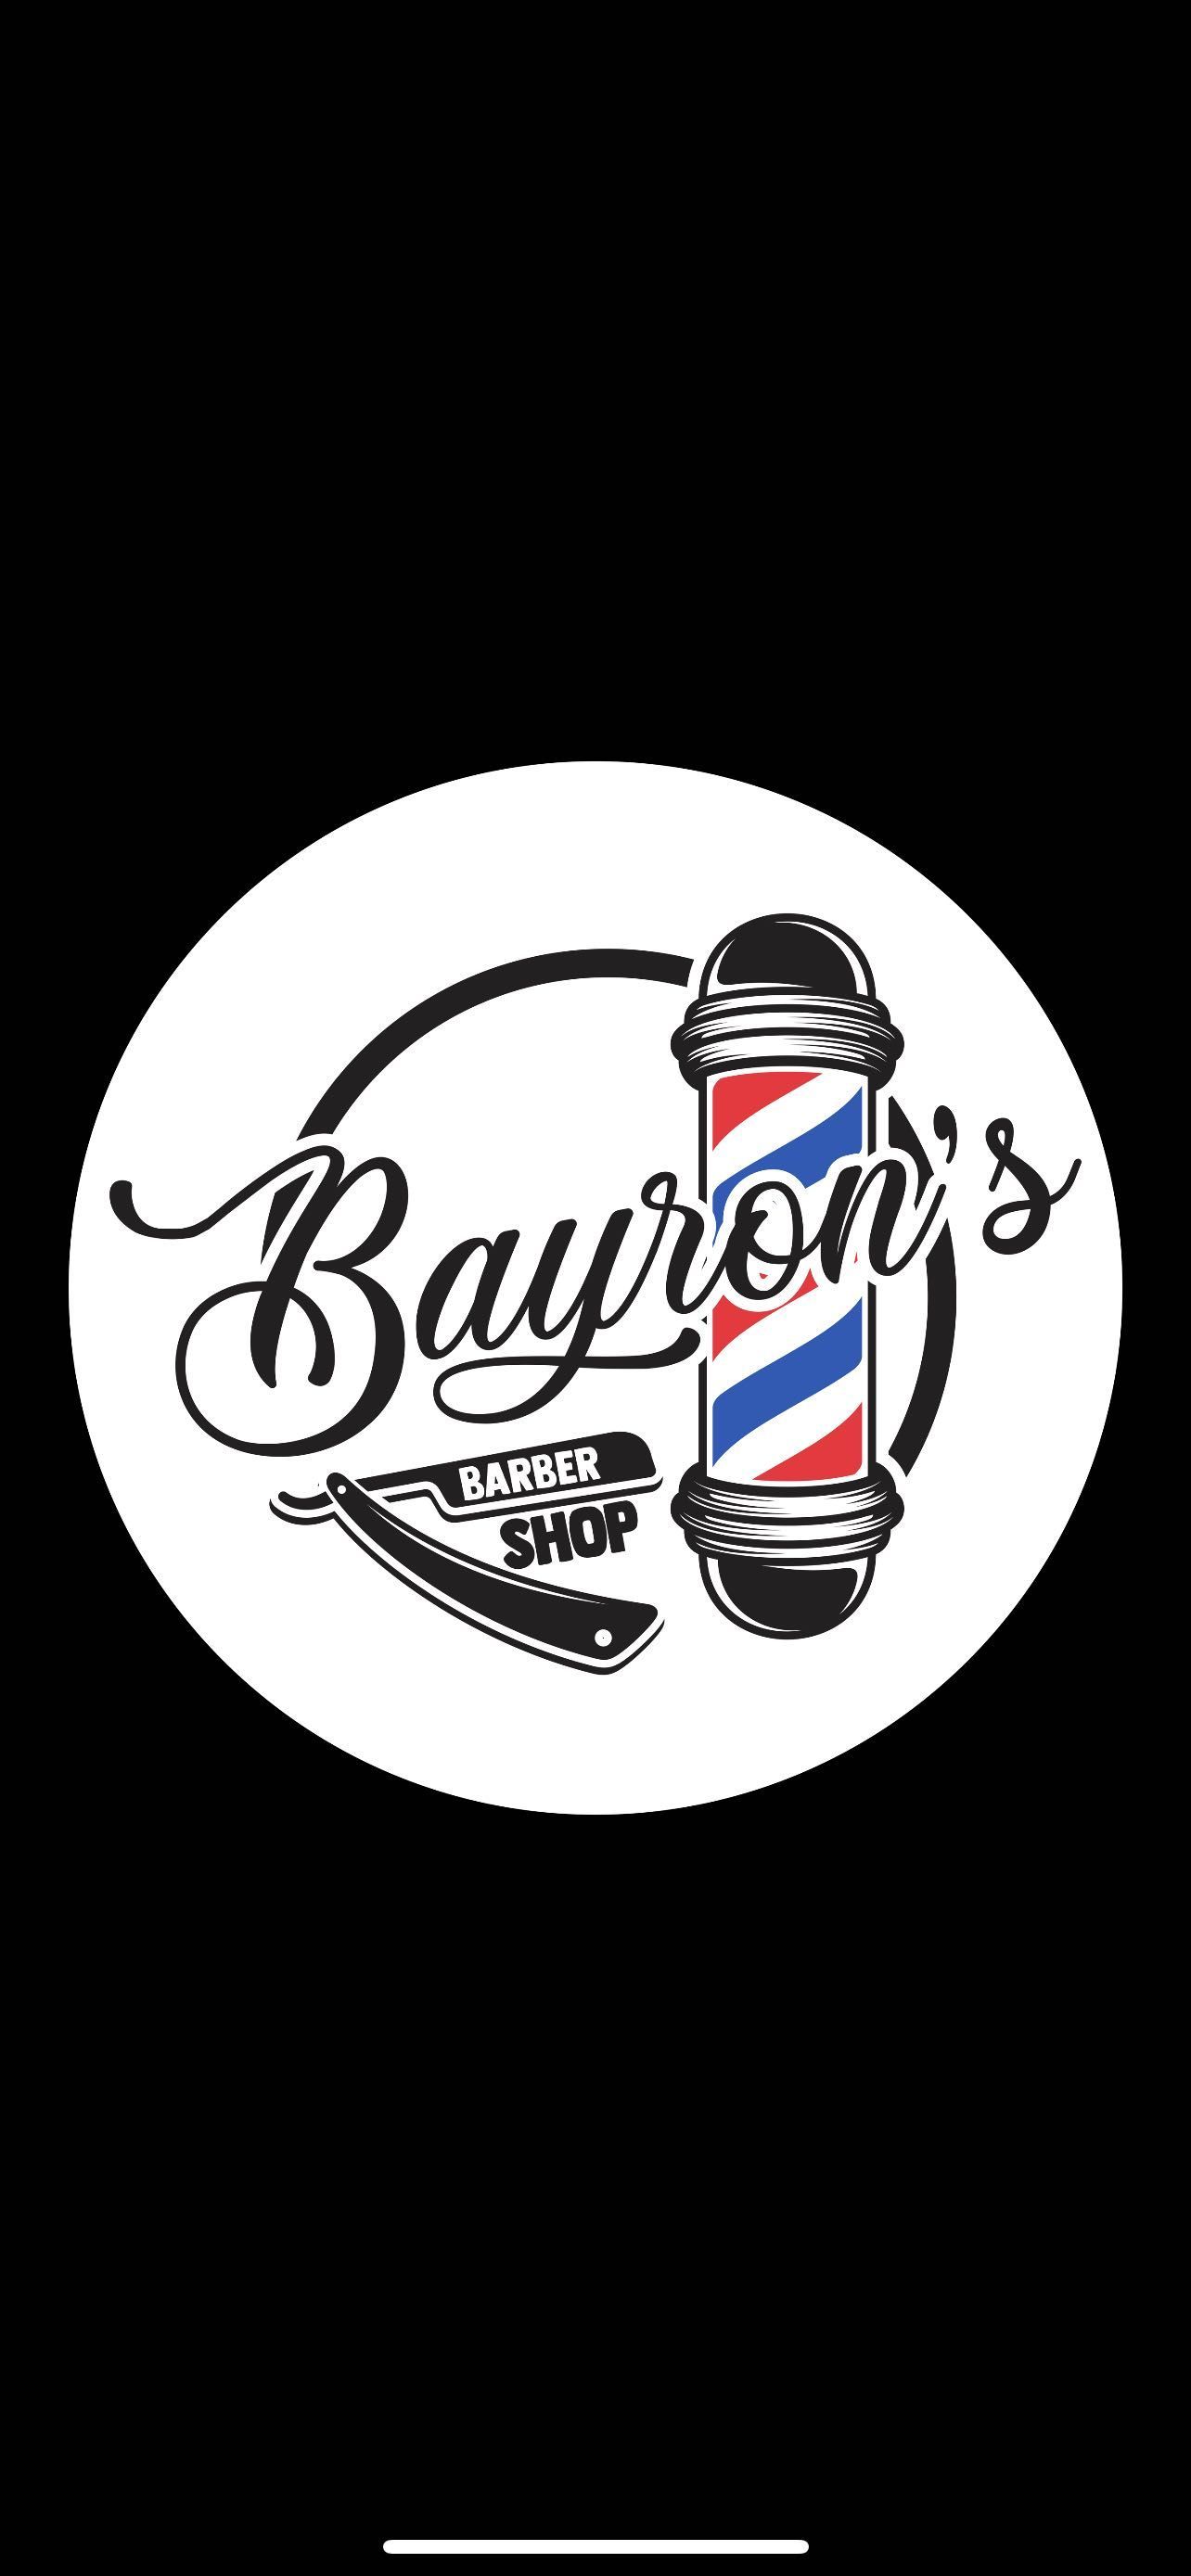 Bayron Cuts, 8120 Research Blvd., 104 A, Austin, 78758